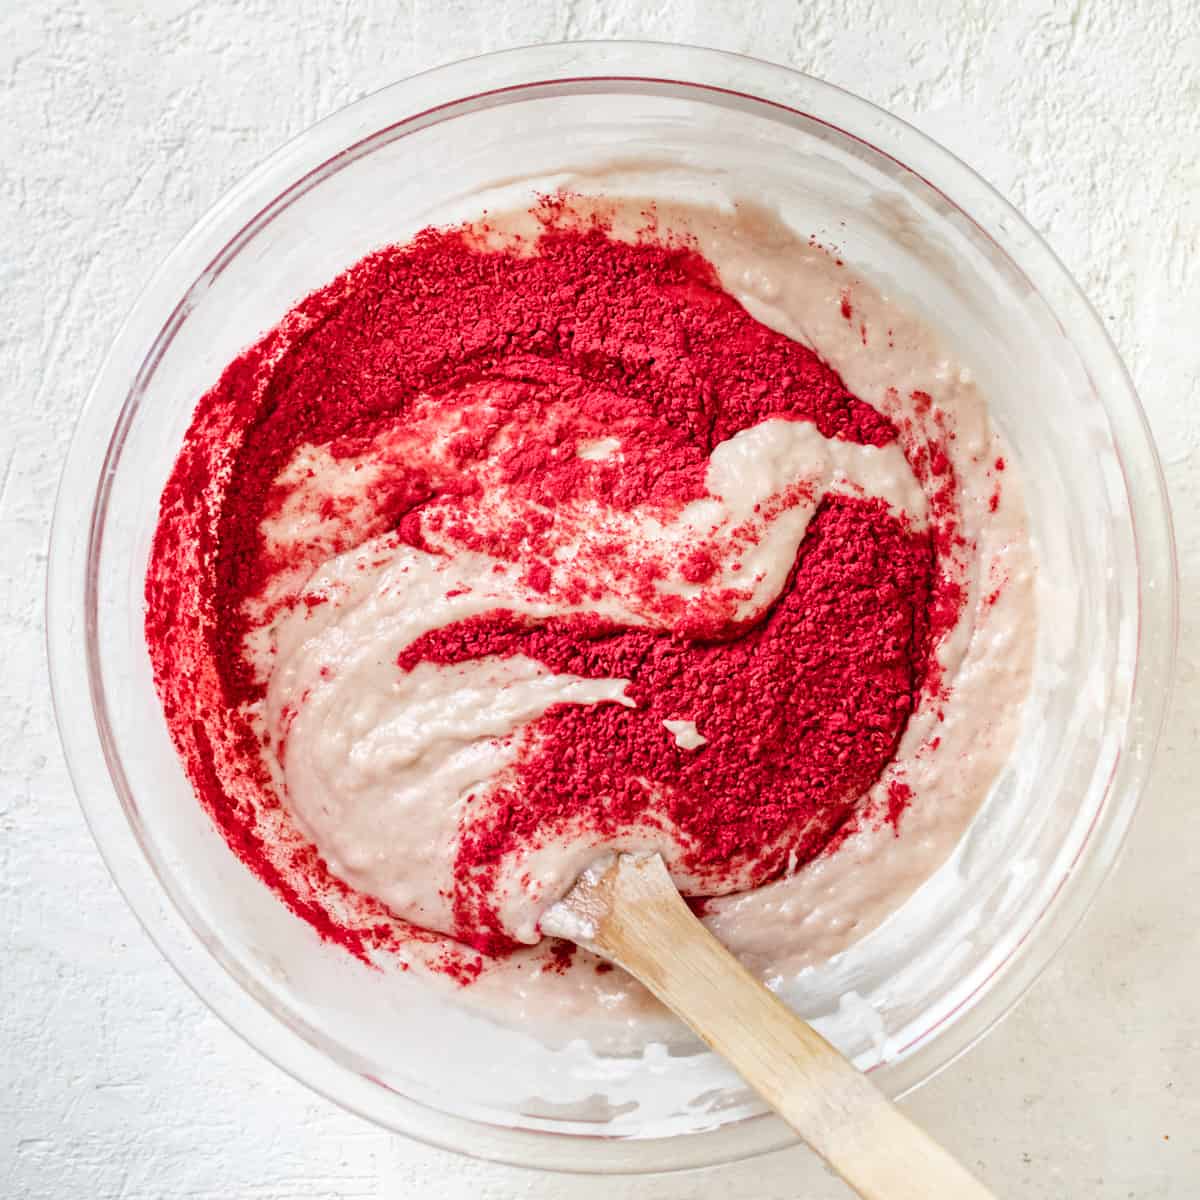 Raspberry powder folded into vanilla cupcake batter in a glass bowl.